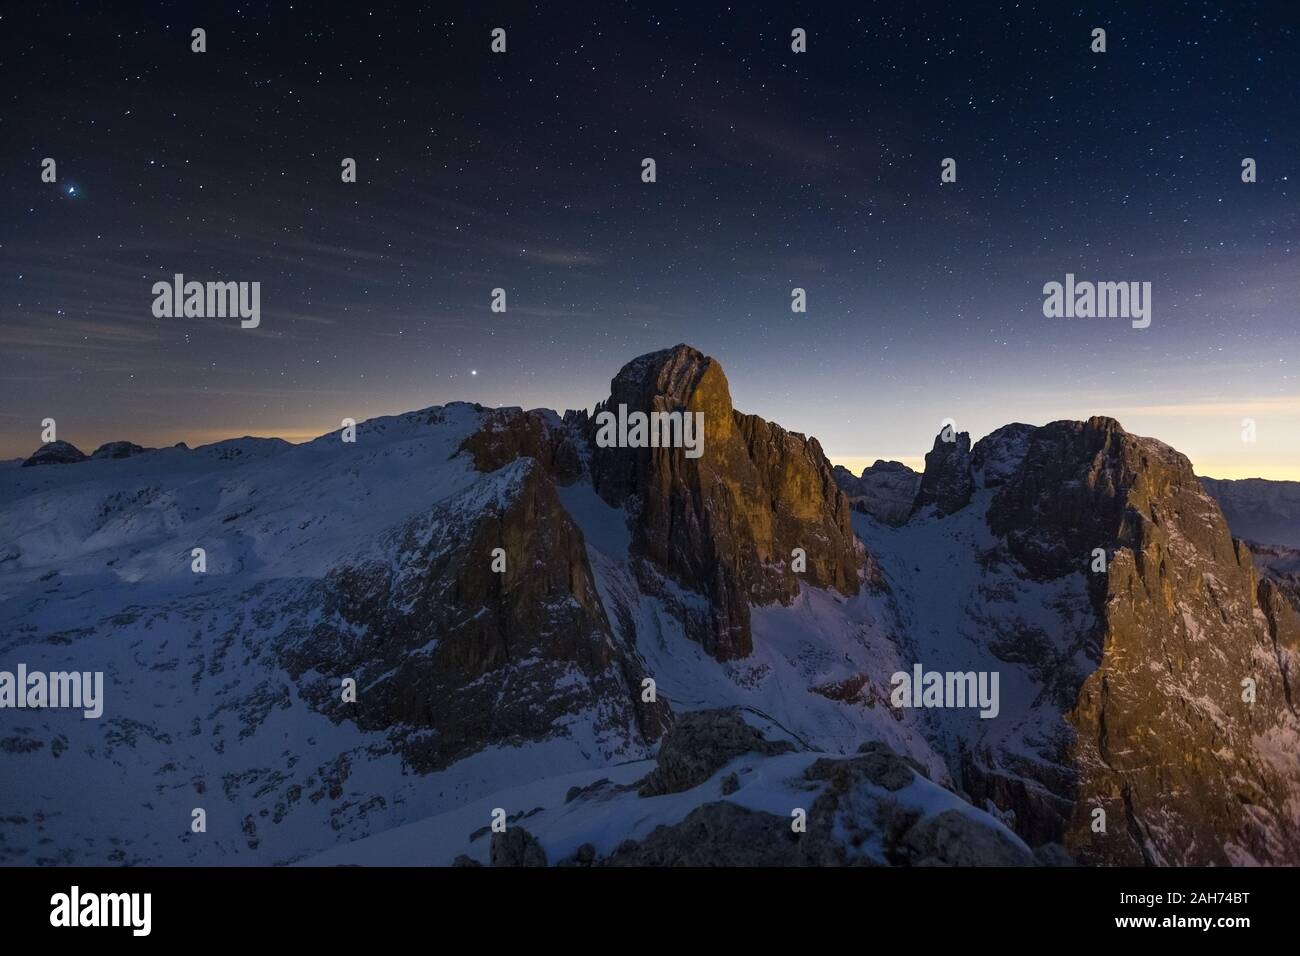 The Pale di San Martino group at night. Pala peak. The Dolomites of Trentino. Night mountain landscape, starry sky. Primiero. Italian Alps. Europe. Stock Photo